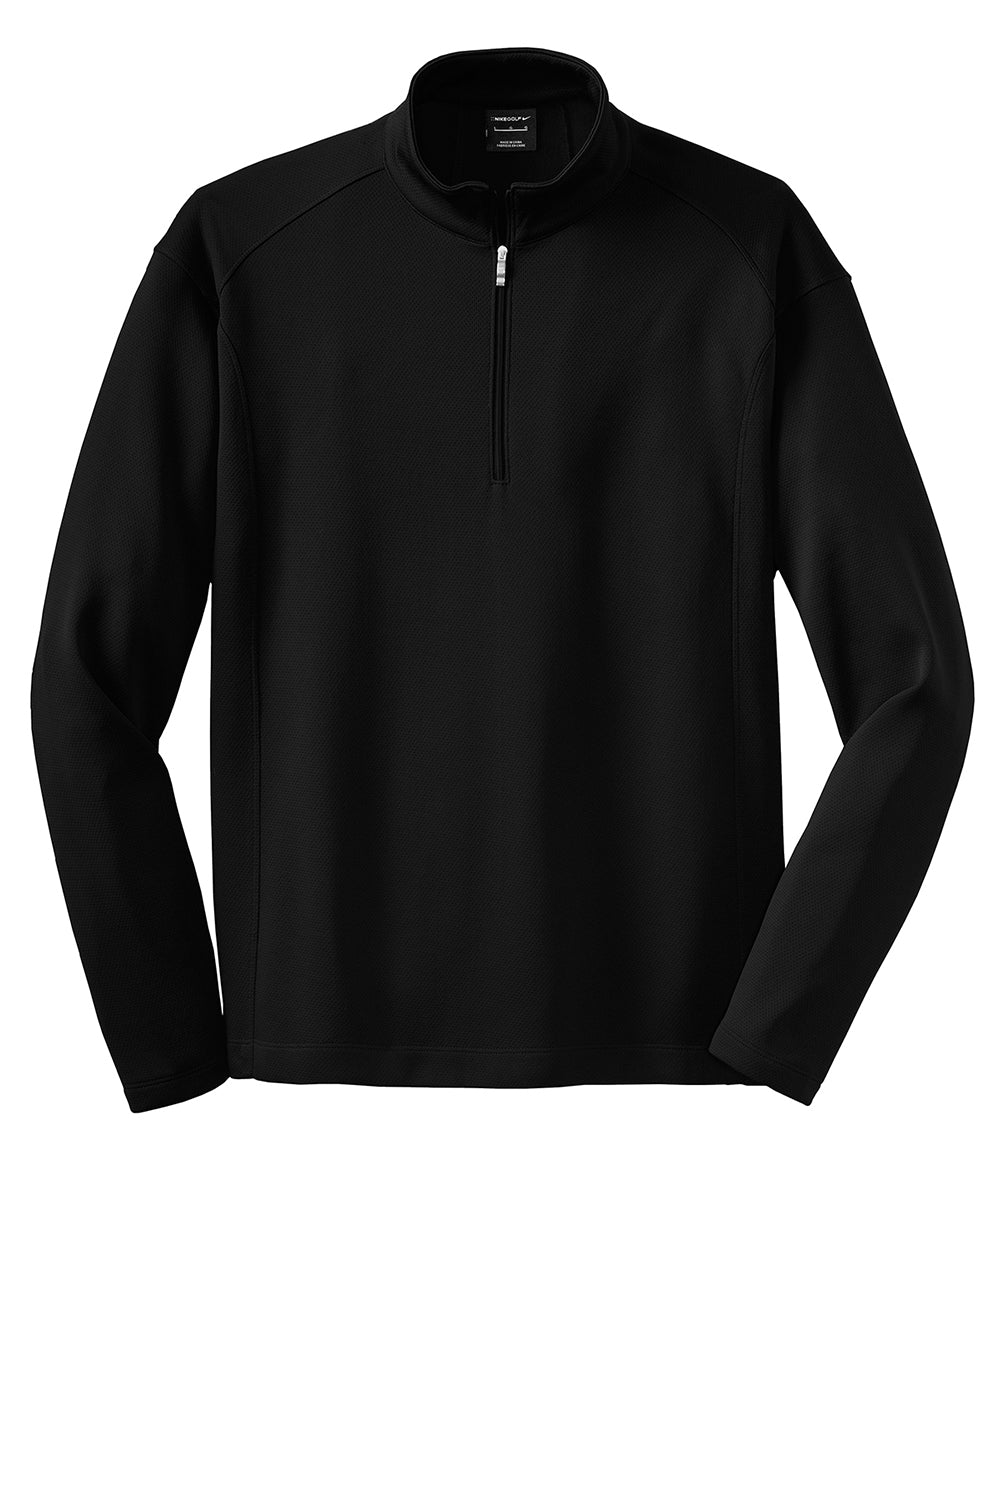 Nike 400099 Mens 1/4 Zip Sweatshirt Black Flat Front